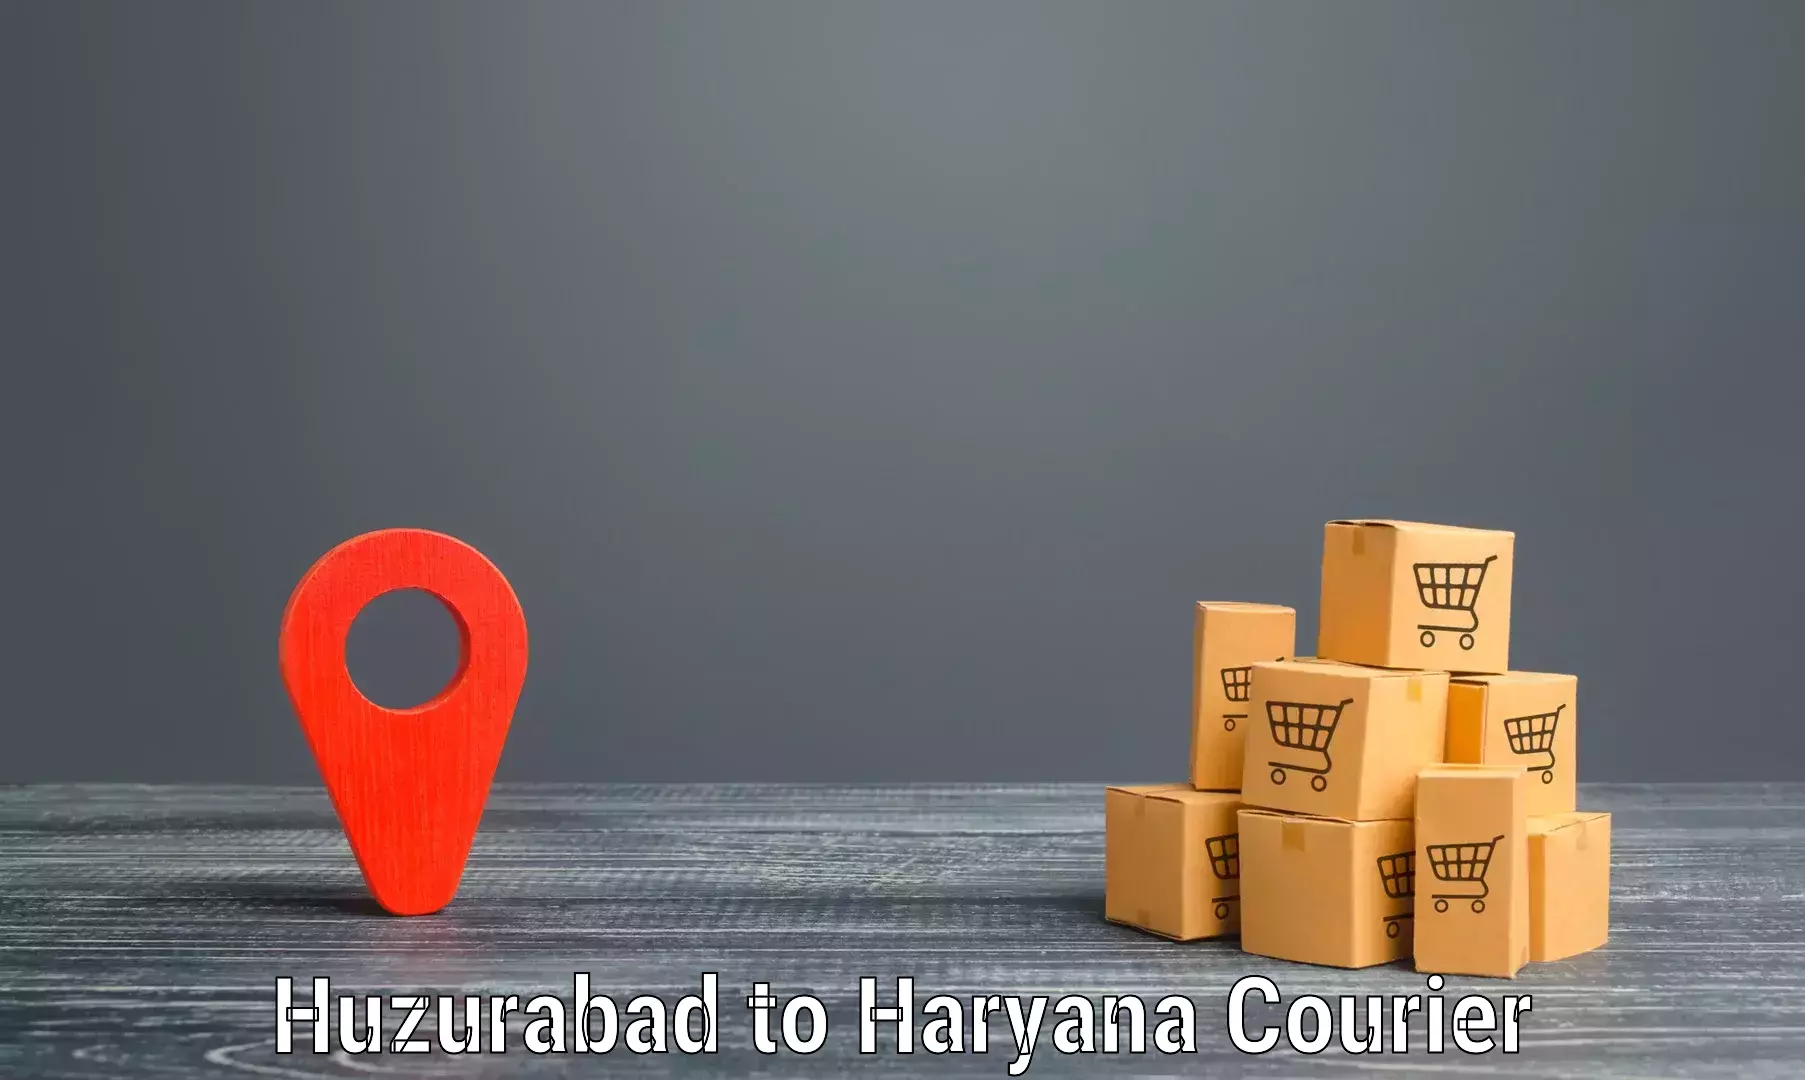 Professional courier handling Huzurabad to Loharu